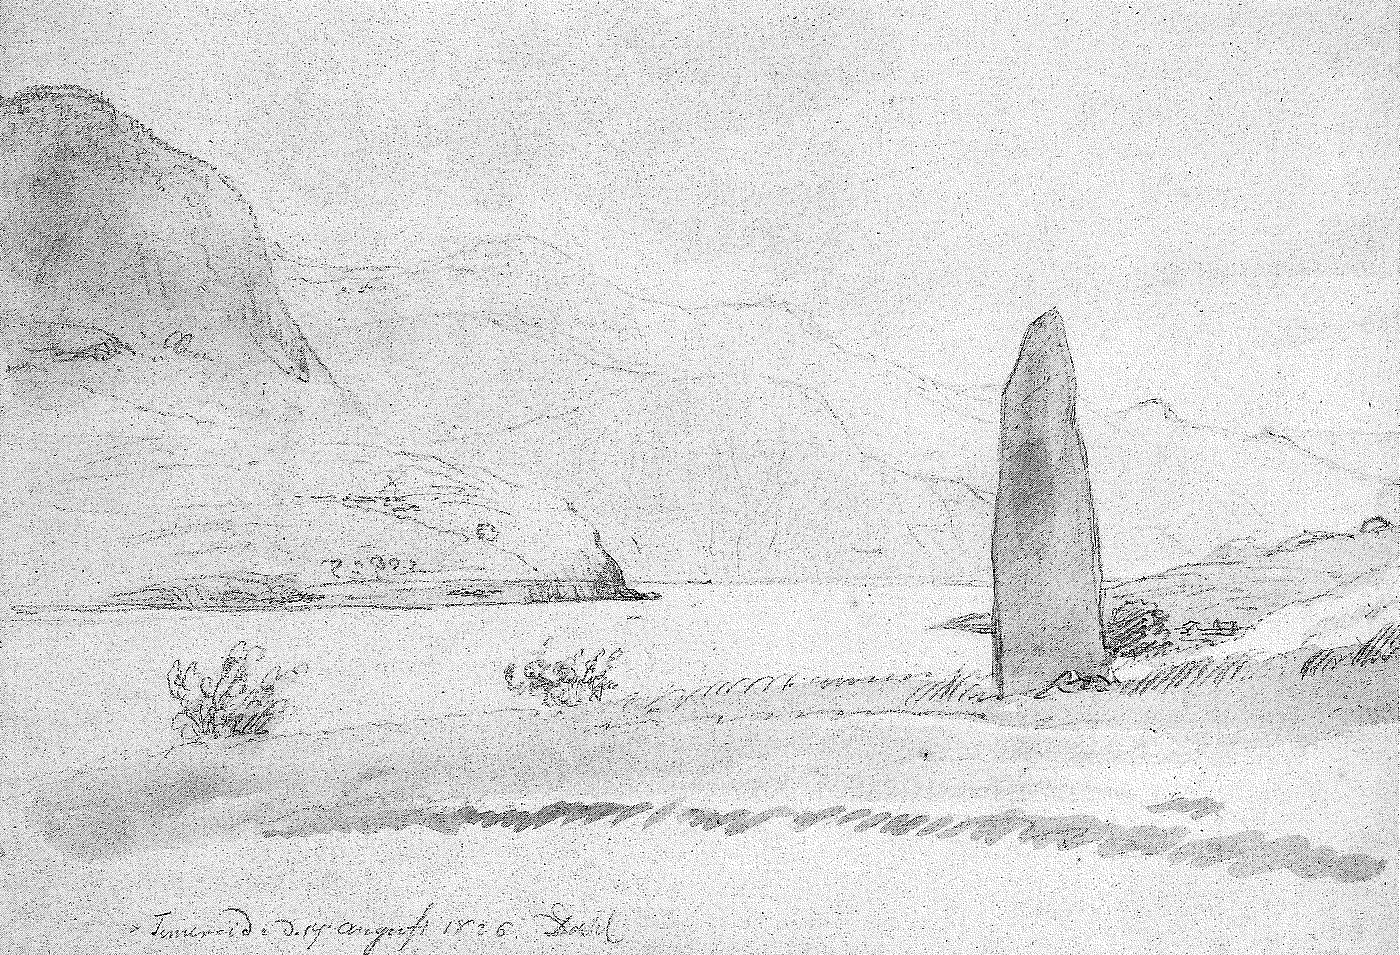 J.C. Dahl: Bautasten ved Sognefjorden, 17. august 1826